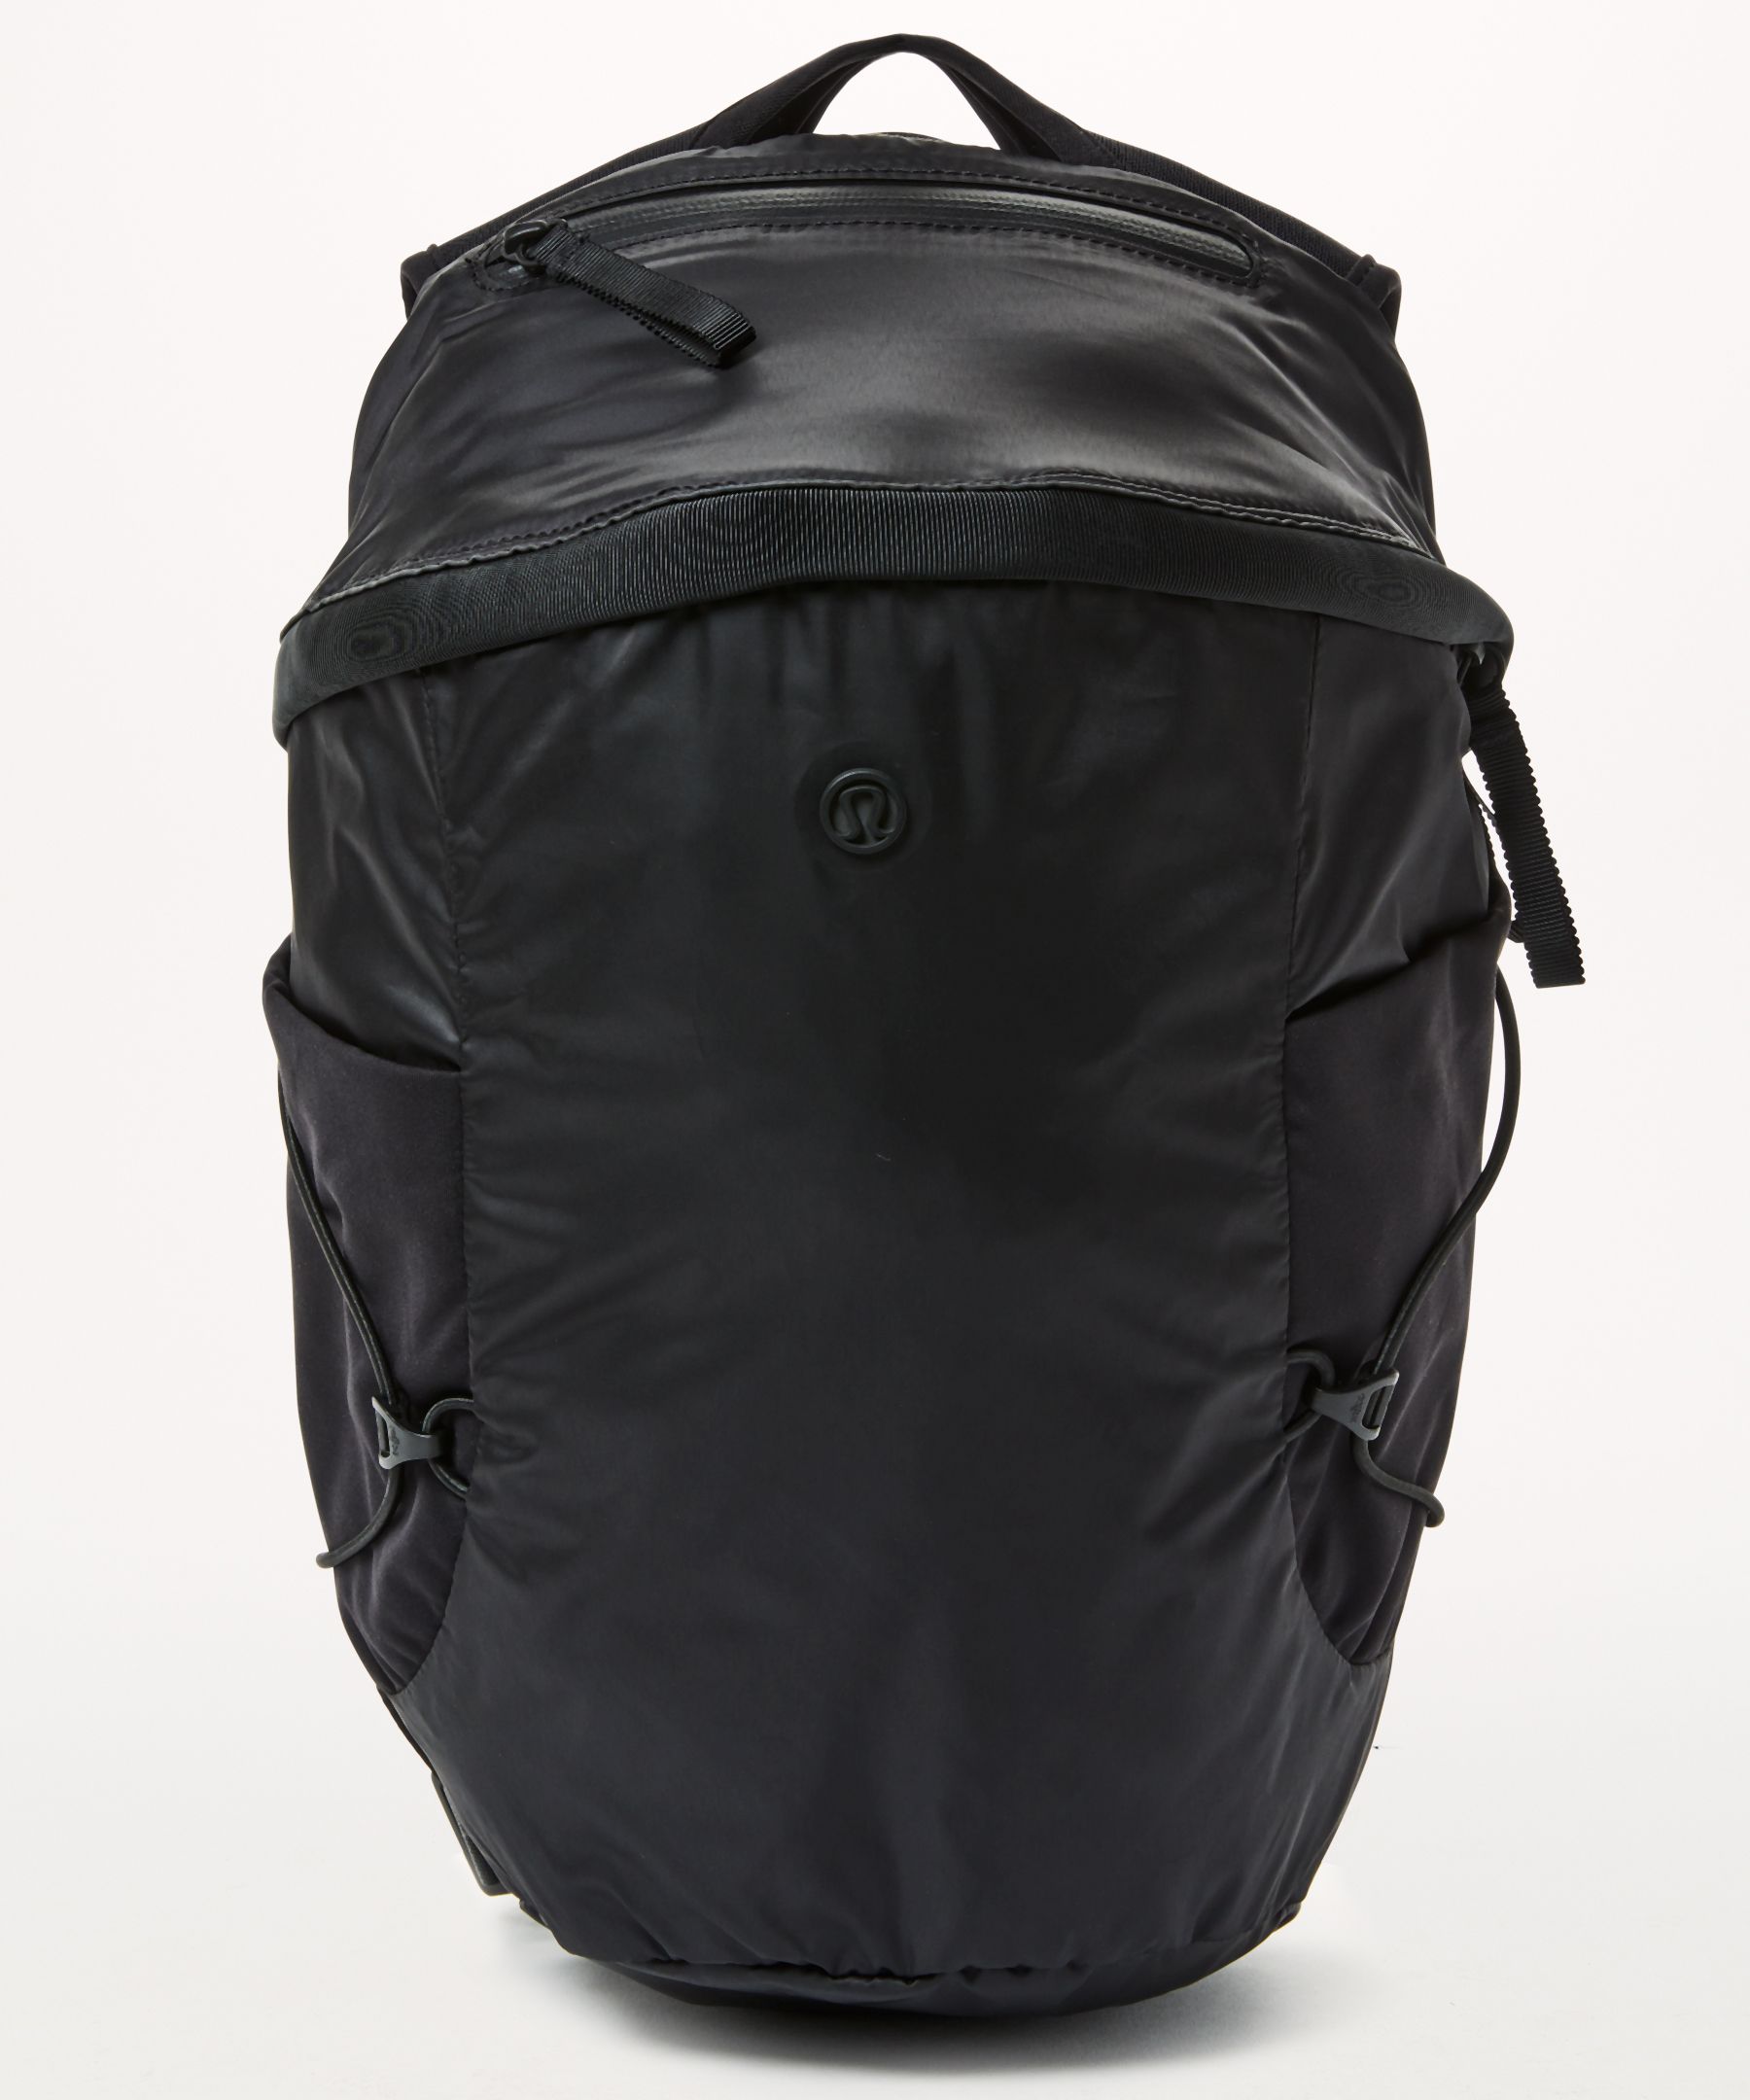 grey lululemon backpack